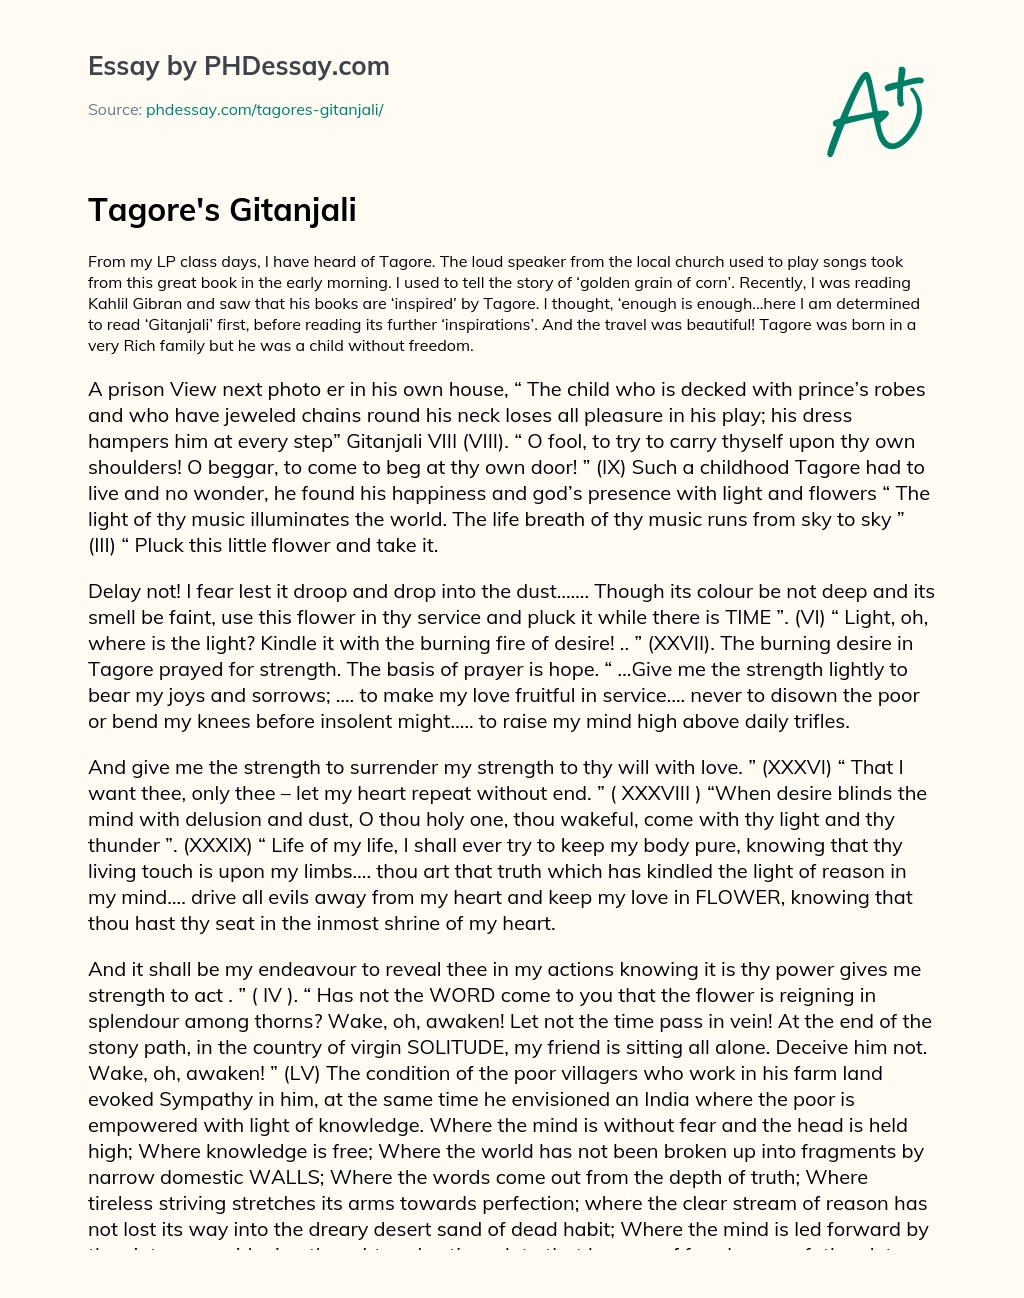 Tagore’s Gitanjali essay